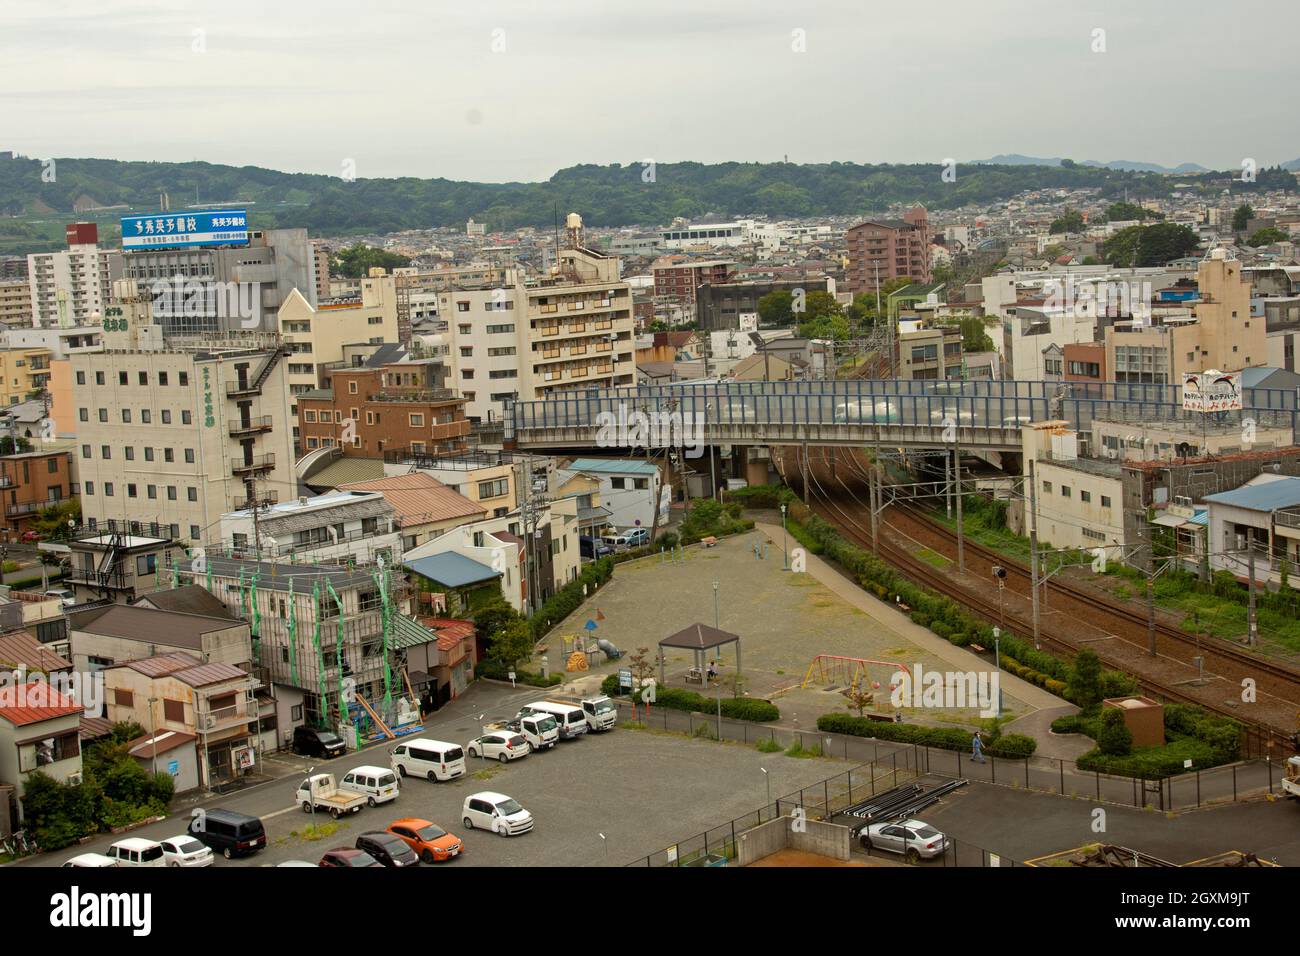 View of Shimizu railroad and cityscape, Shimizu, Shizuoka Prefecture, Japan Stock Photo